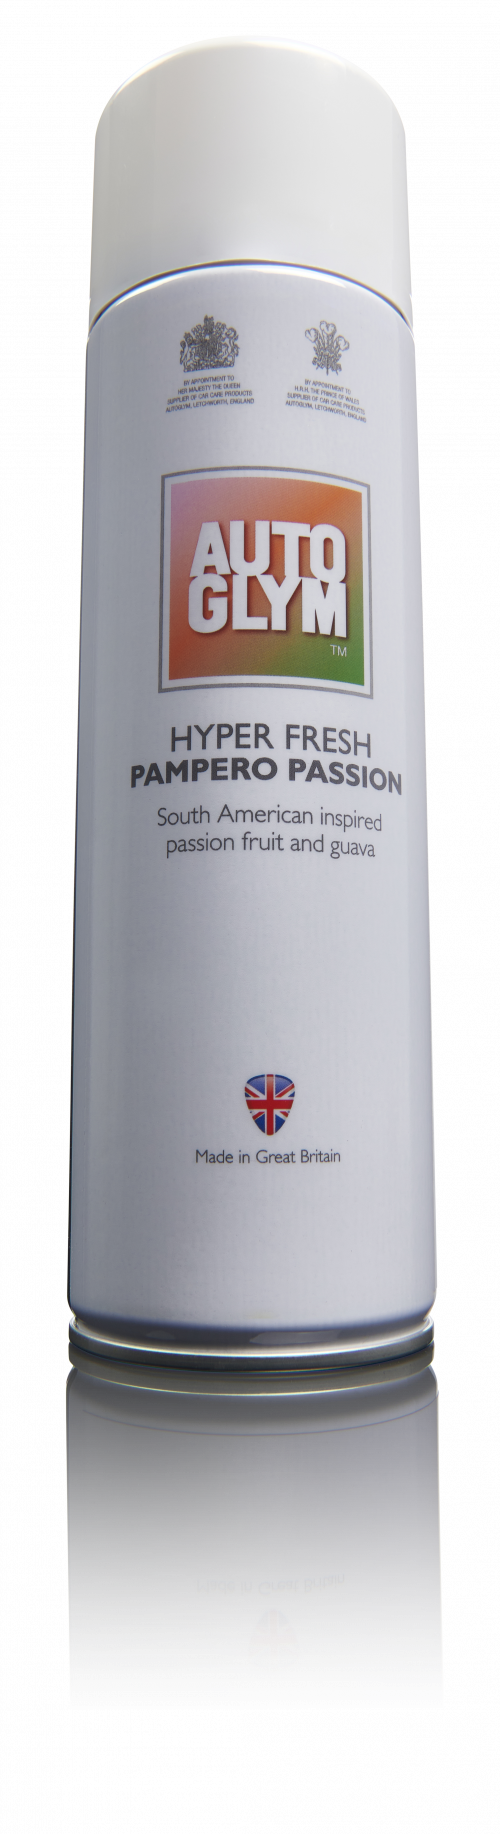 Hyper Fresh Pampero Passion